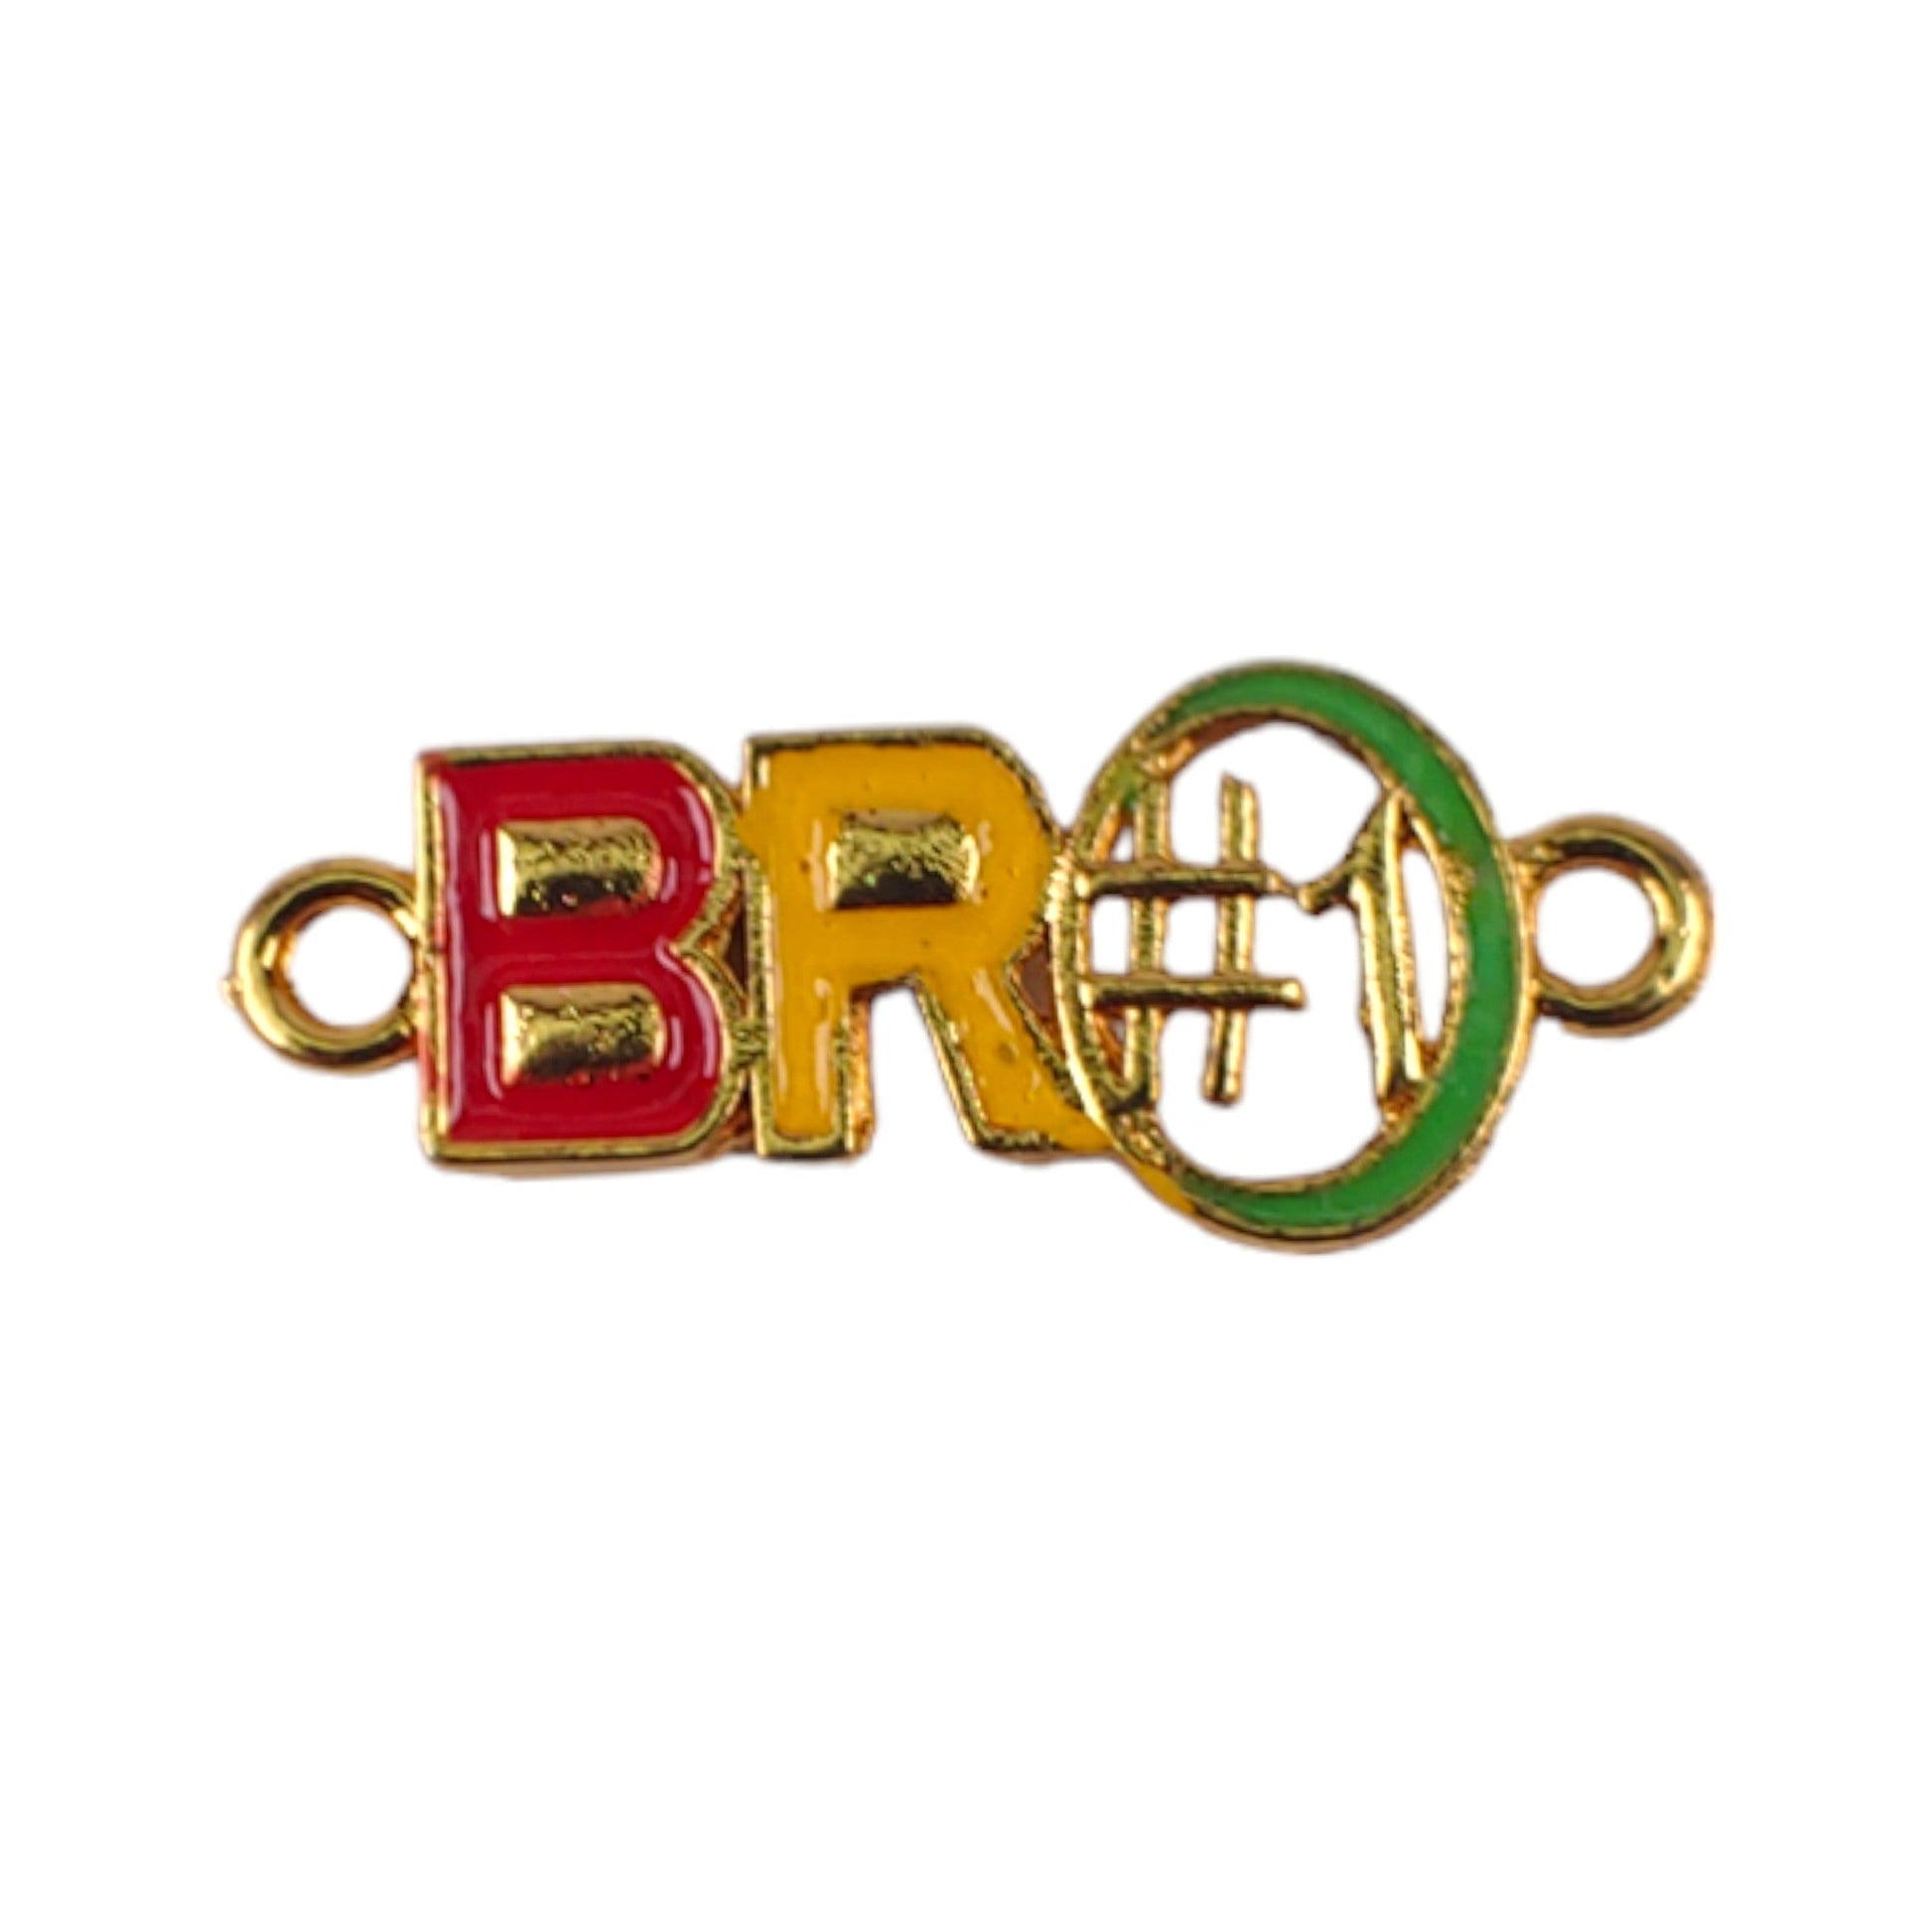 BRO#1 Name Metal Motif, BRO Metal Penddle for Jewellery Making, Craft or Decor